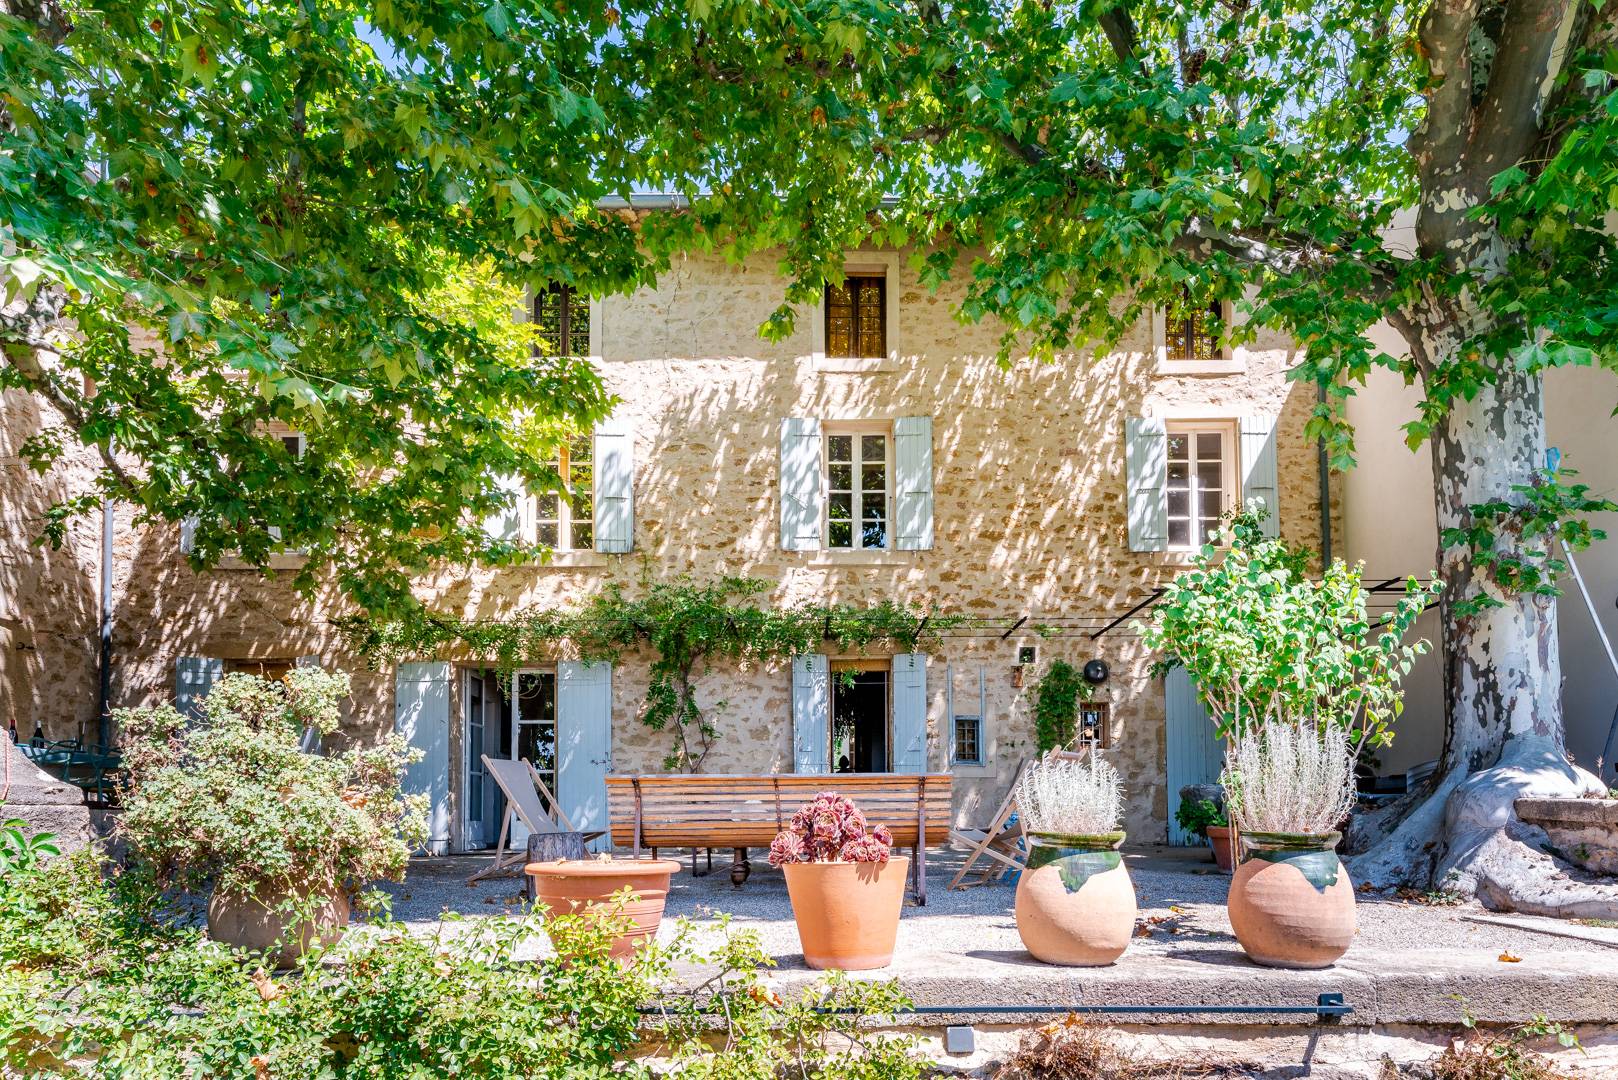 Location en Provence, jardin privé, 10 pers